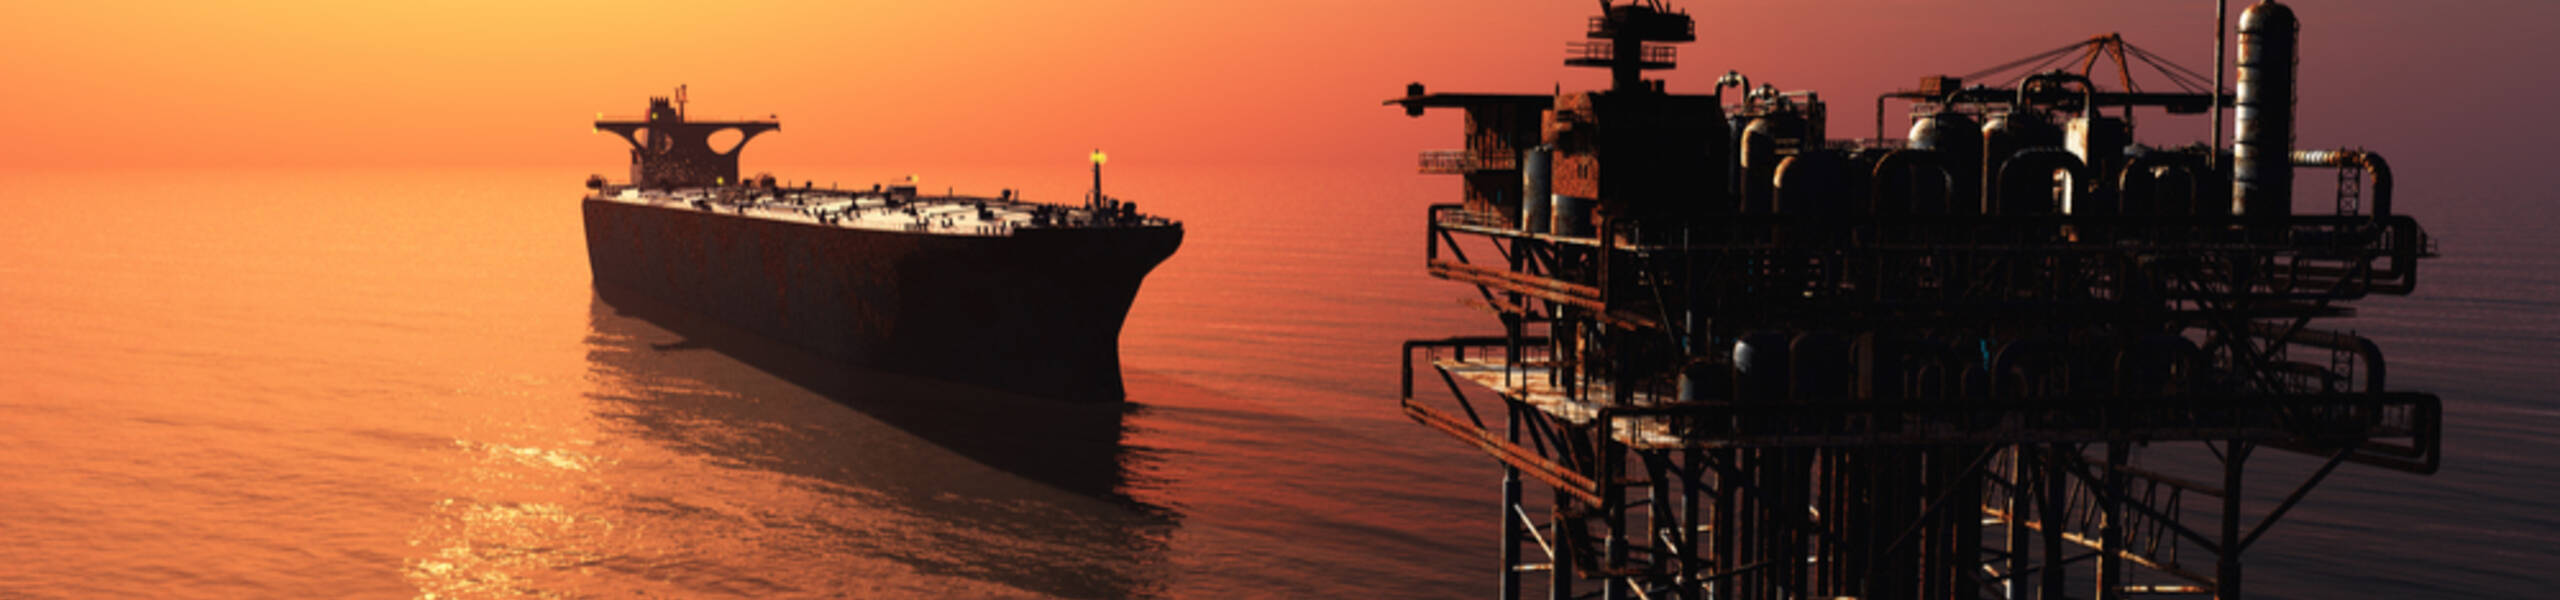 Brent oil: trading in range